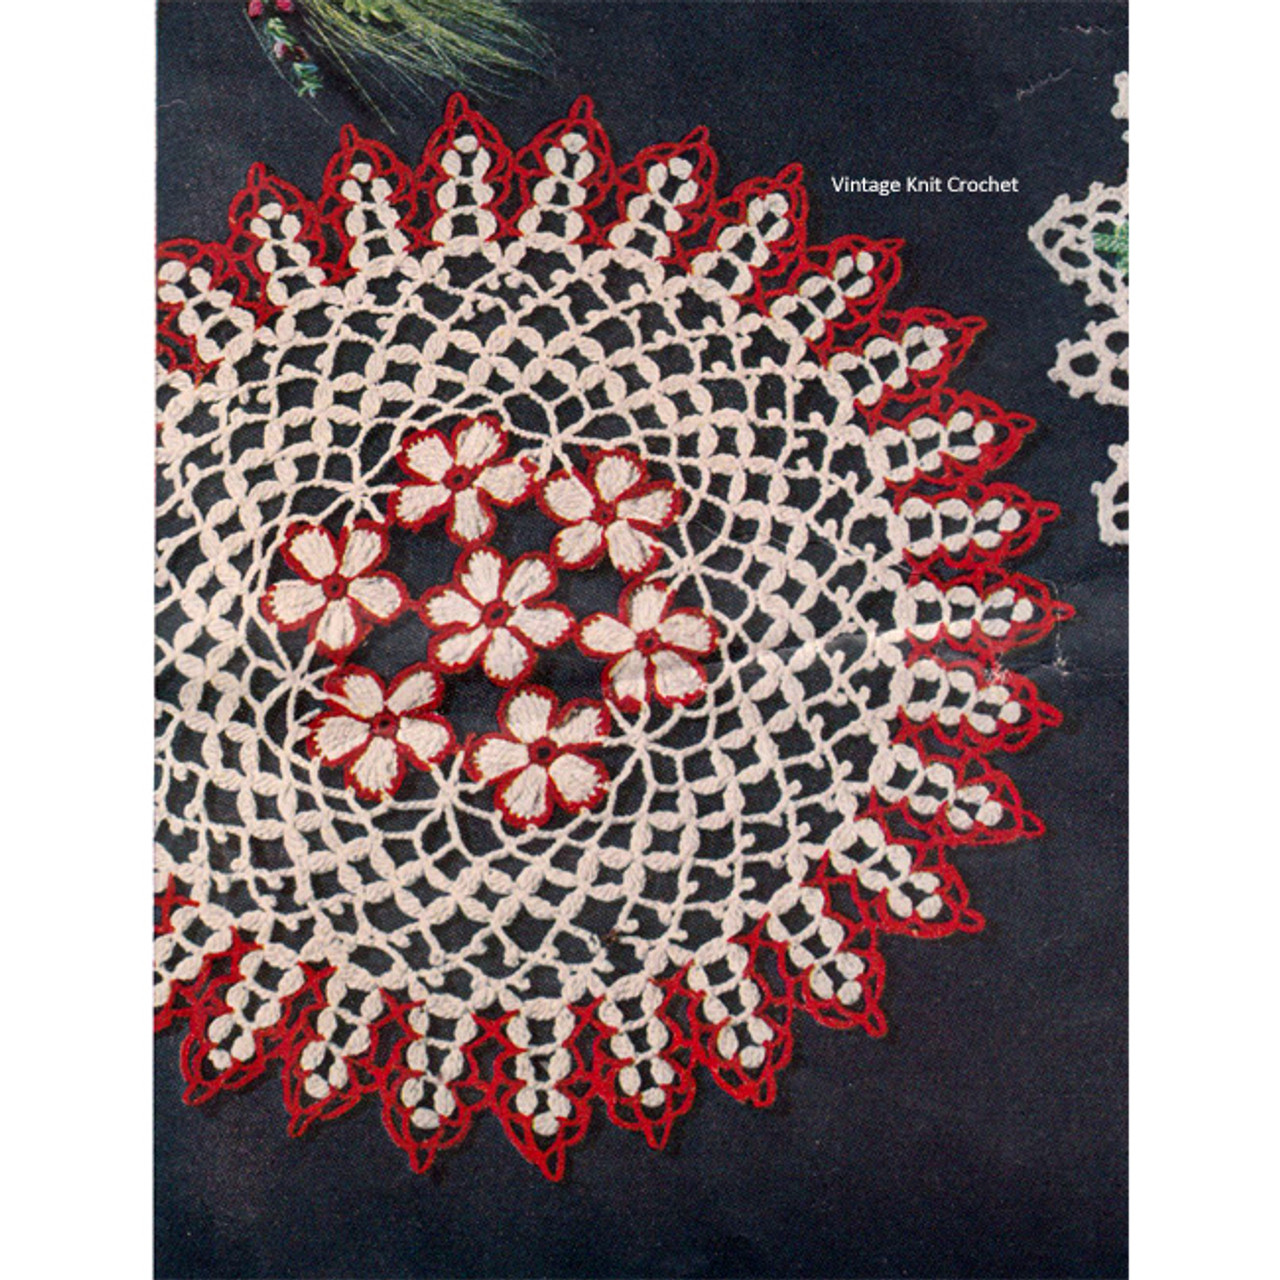 Crochet Daisy Doily Pattern in Red White